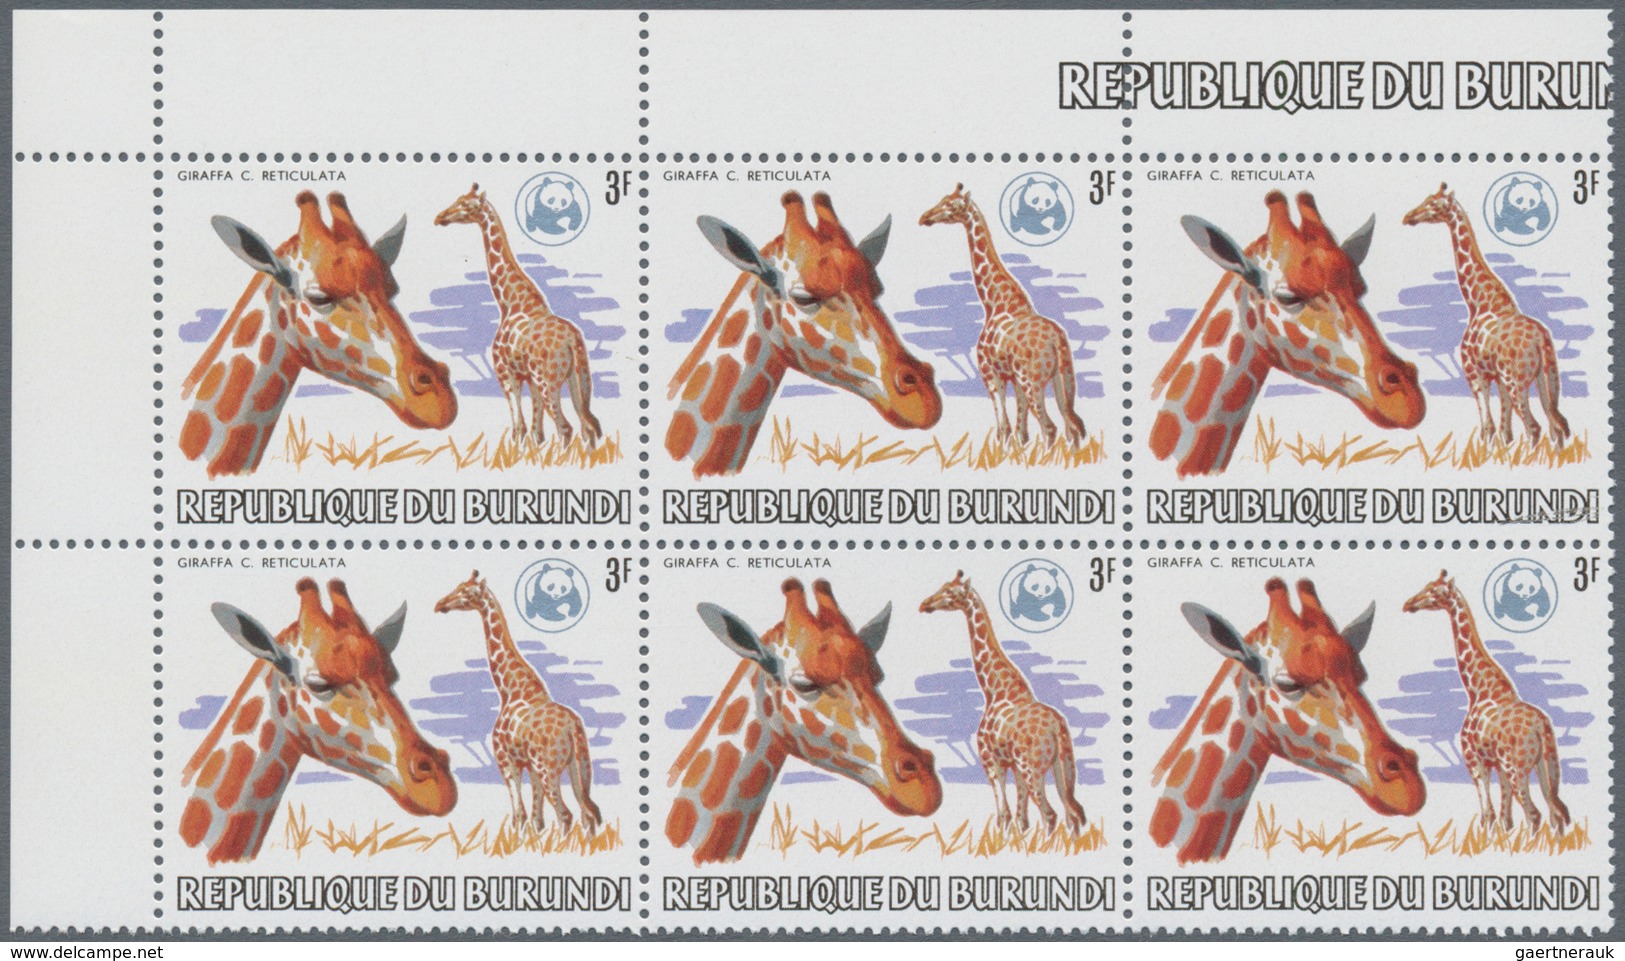 Burundi: 1983, African Wildlife complete set of 13 from 2fr. to 85fr. (Lion, Giraffe, Rhinoceros, El